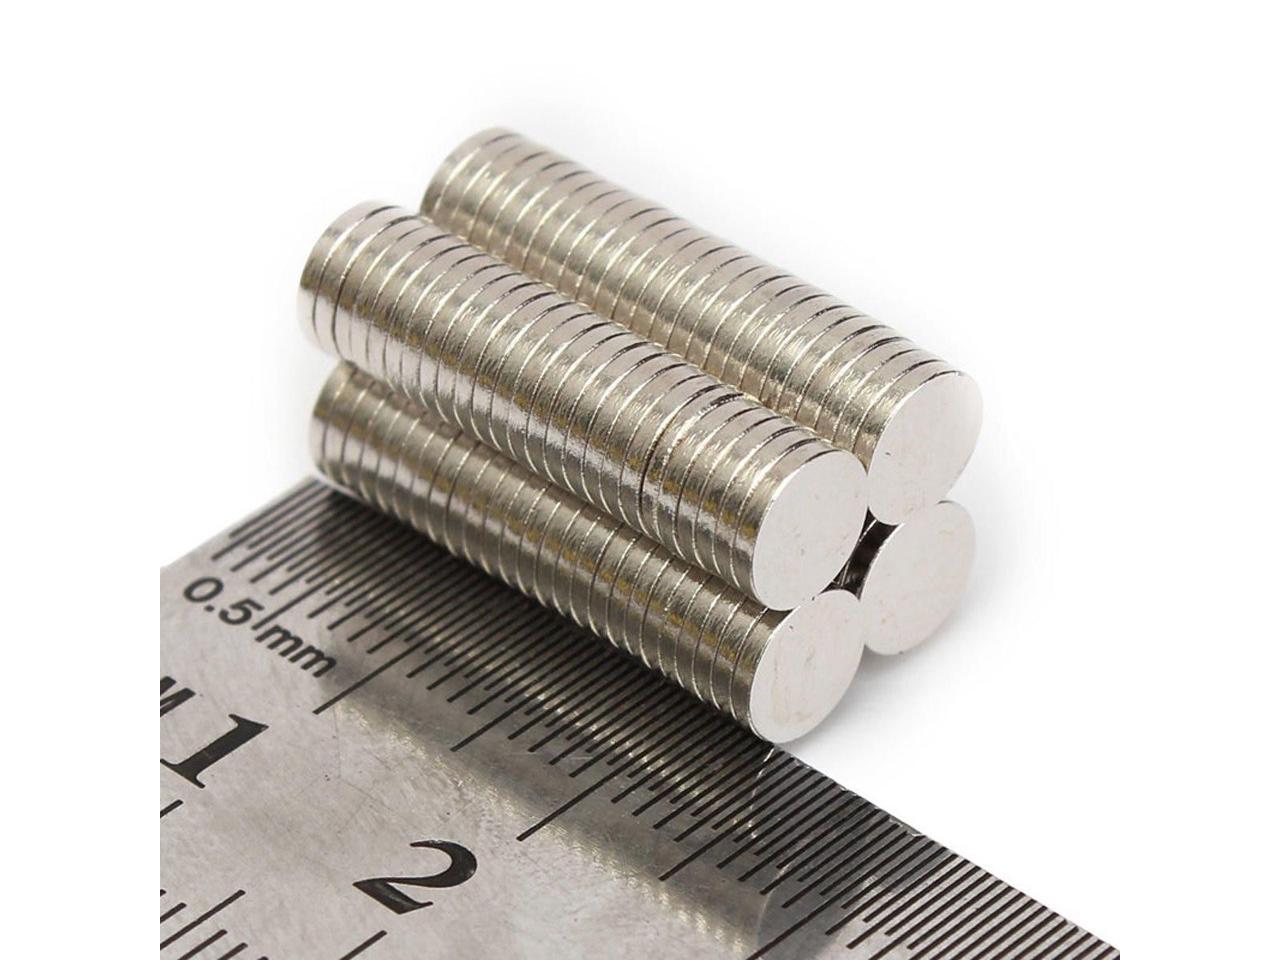  50Pcs  6 X 1 mm  N52  Neodymium Disc Super Strong Rare Earth  Fridge Magnets